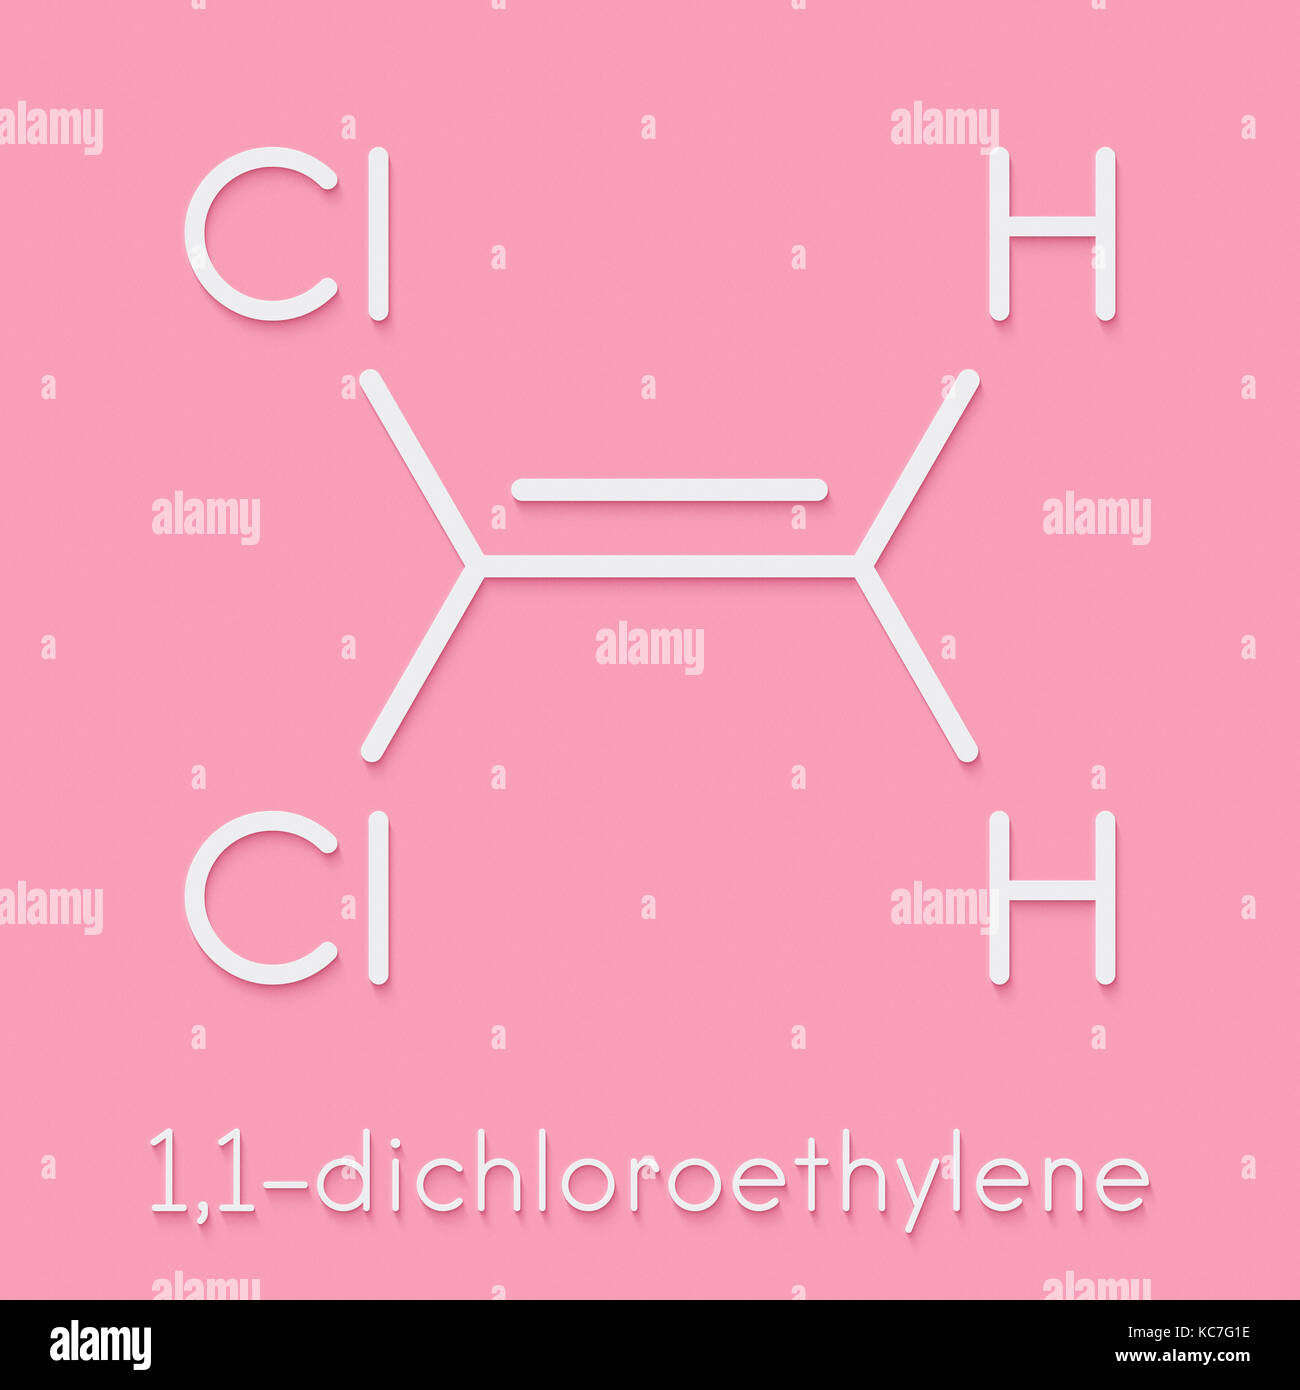 1,1-dichloroethene (DCE) polyvinylidine chloride (PVDC) building block ...